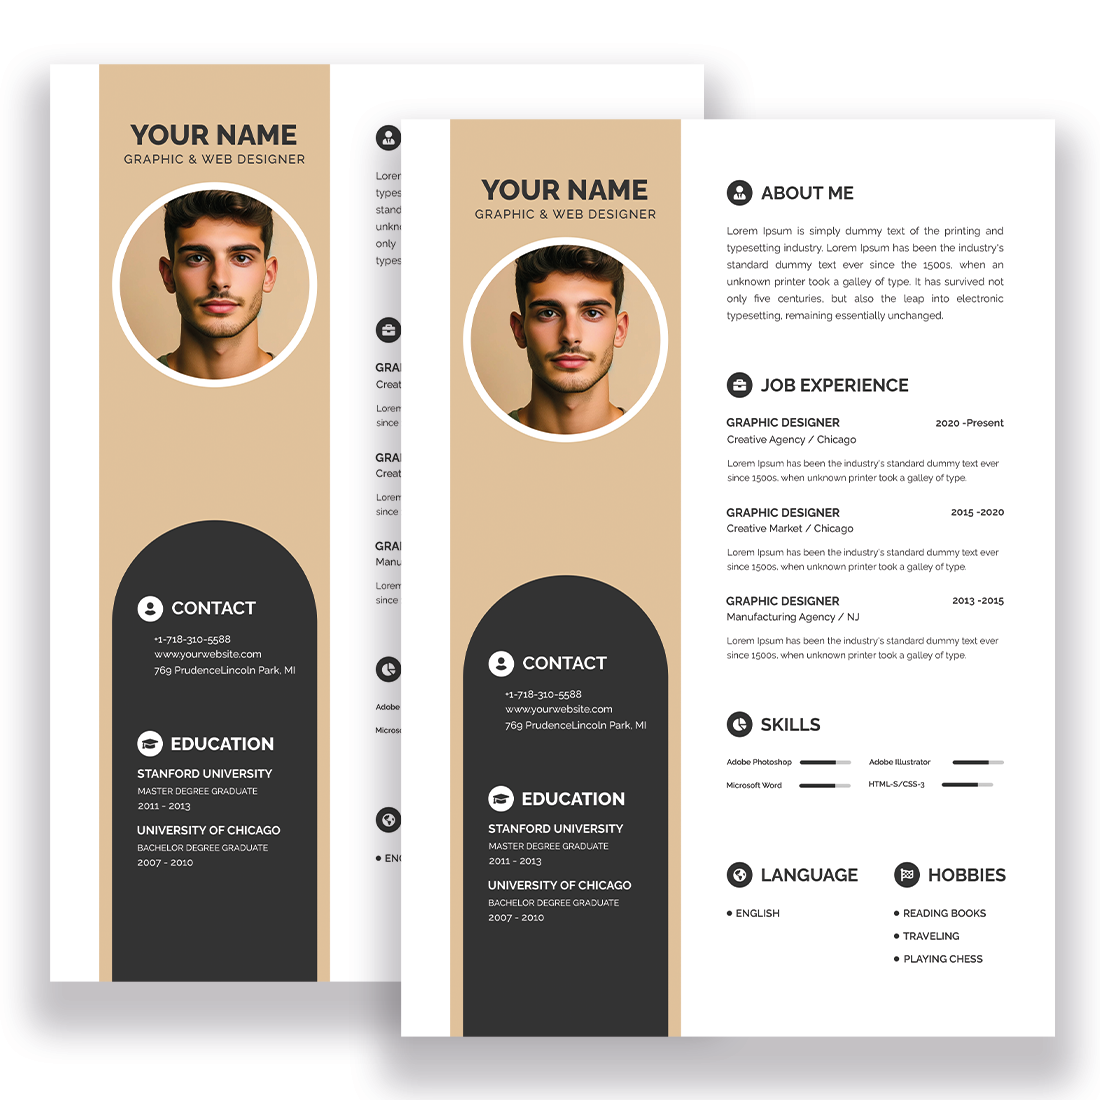 Creative Graphic Designer Resume/CV preview image.